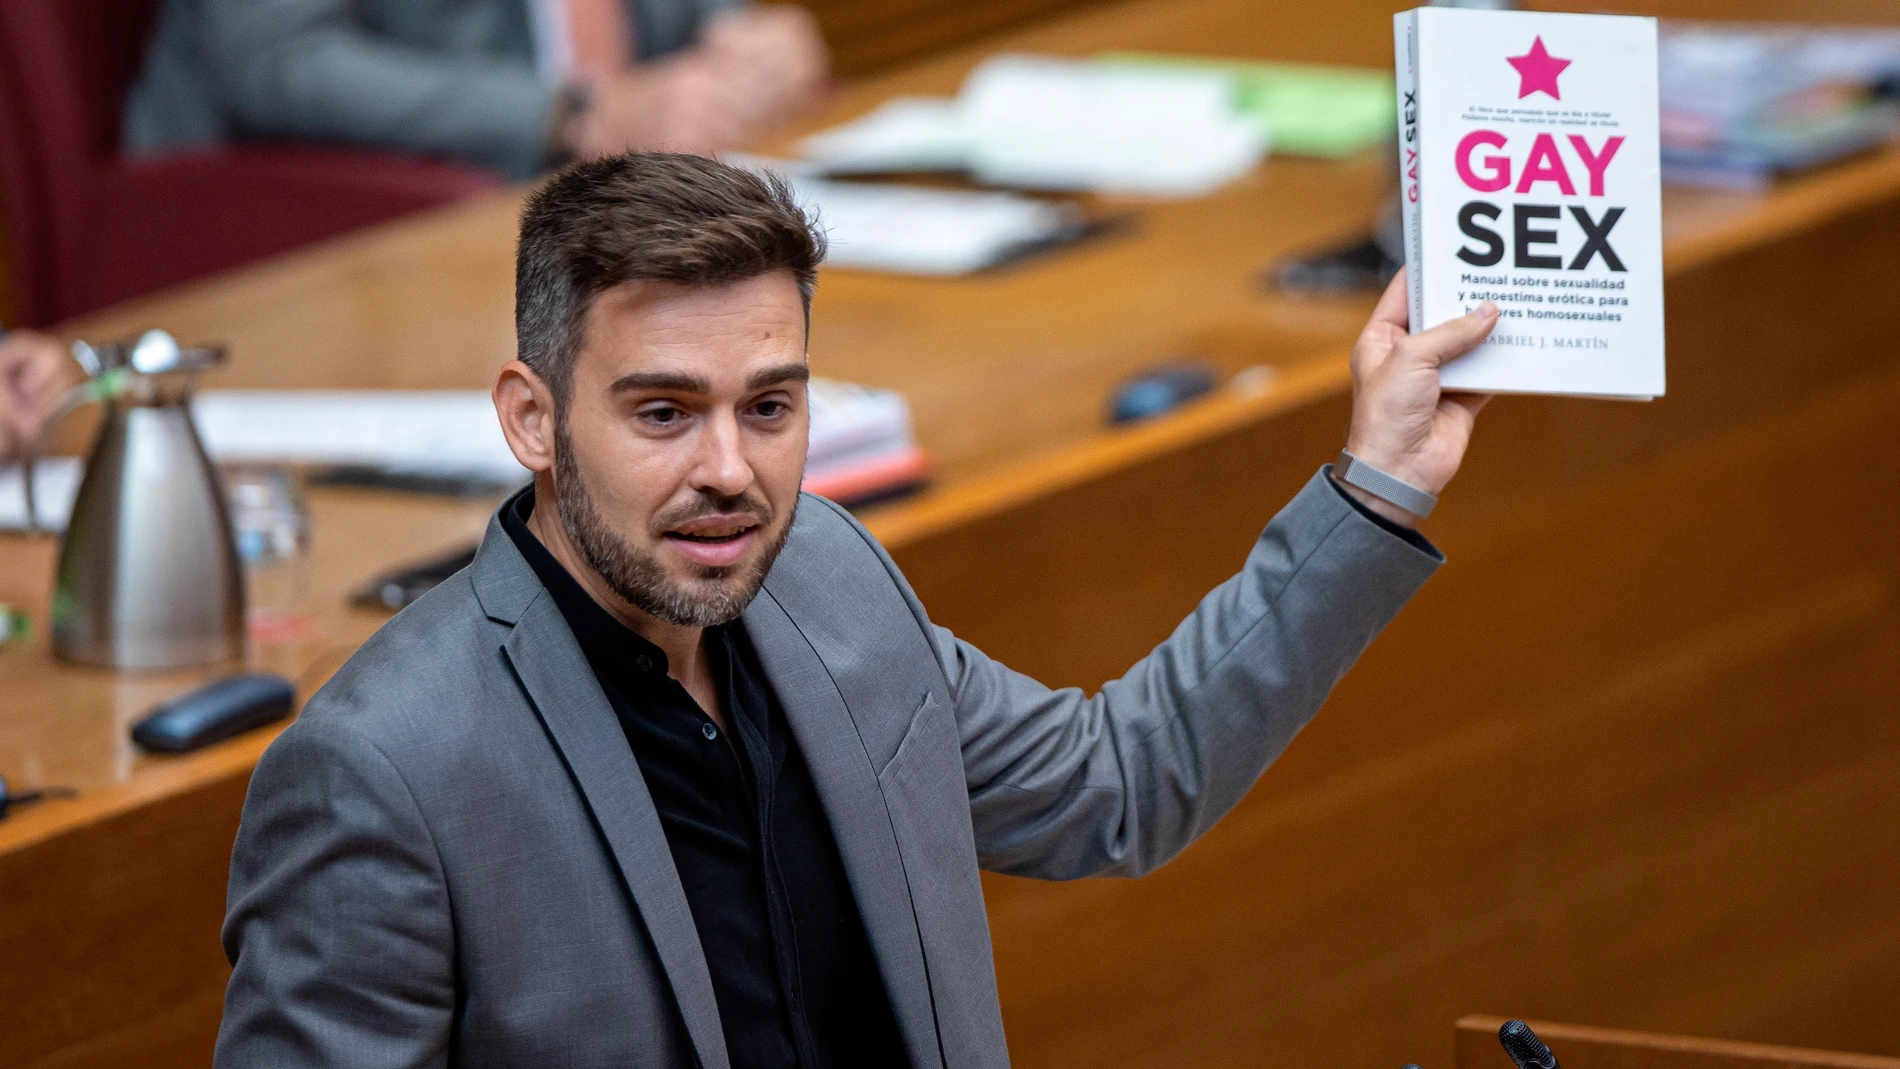 El portavoz del grupo parlamentario Compromís, Fran Ferri, ha mostrado el libro "Gay Sex" en la tribuna de Les Corts